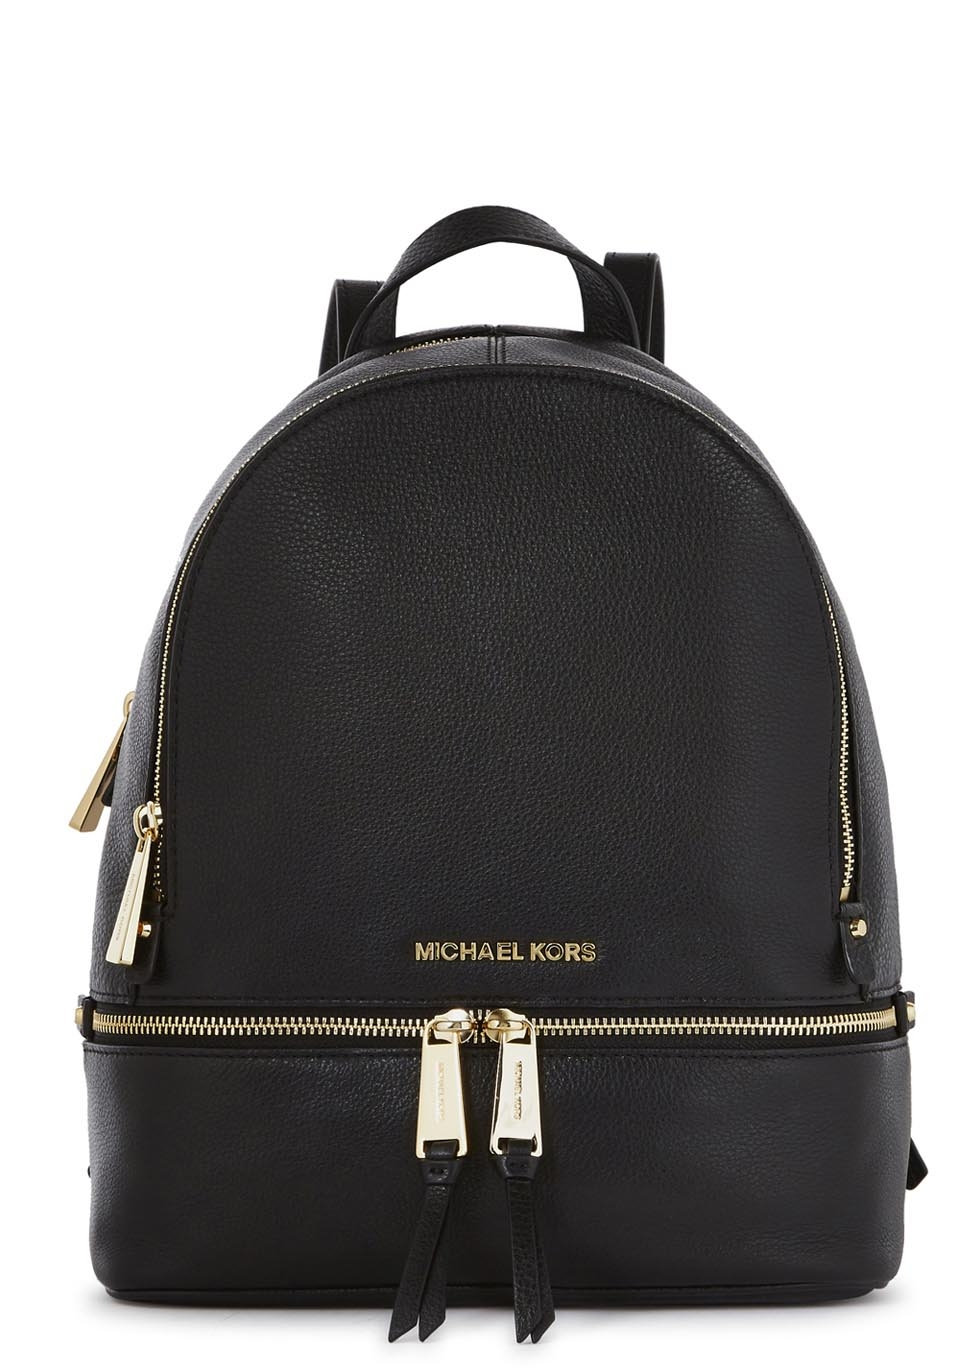 Michael Kors Rhea Small Black Leather Backpack - Lyst